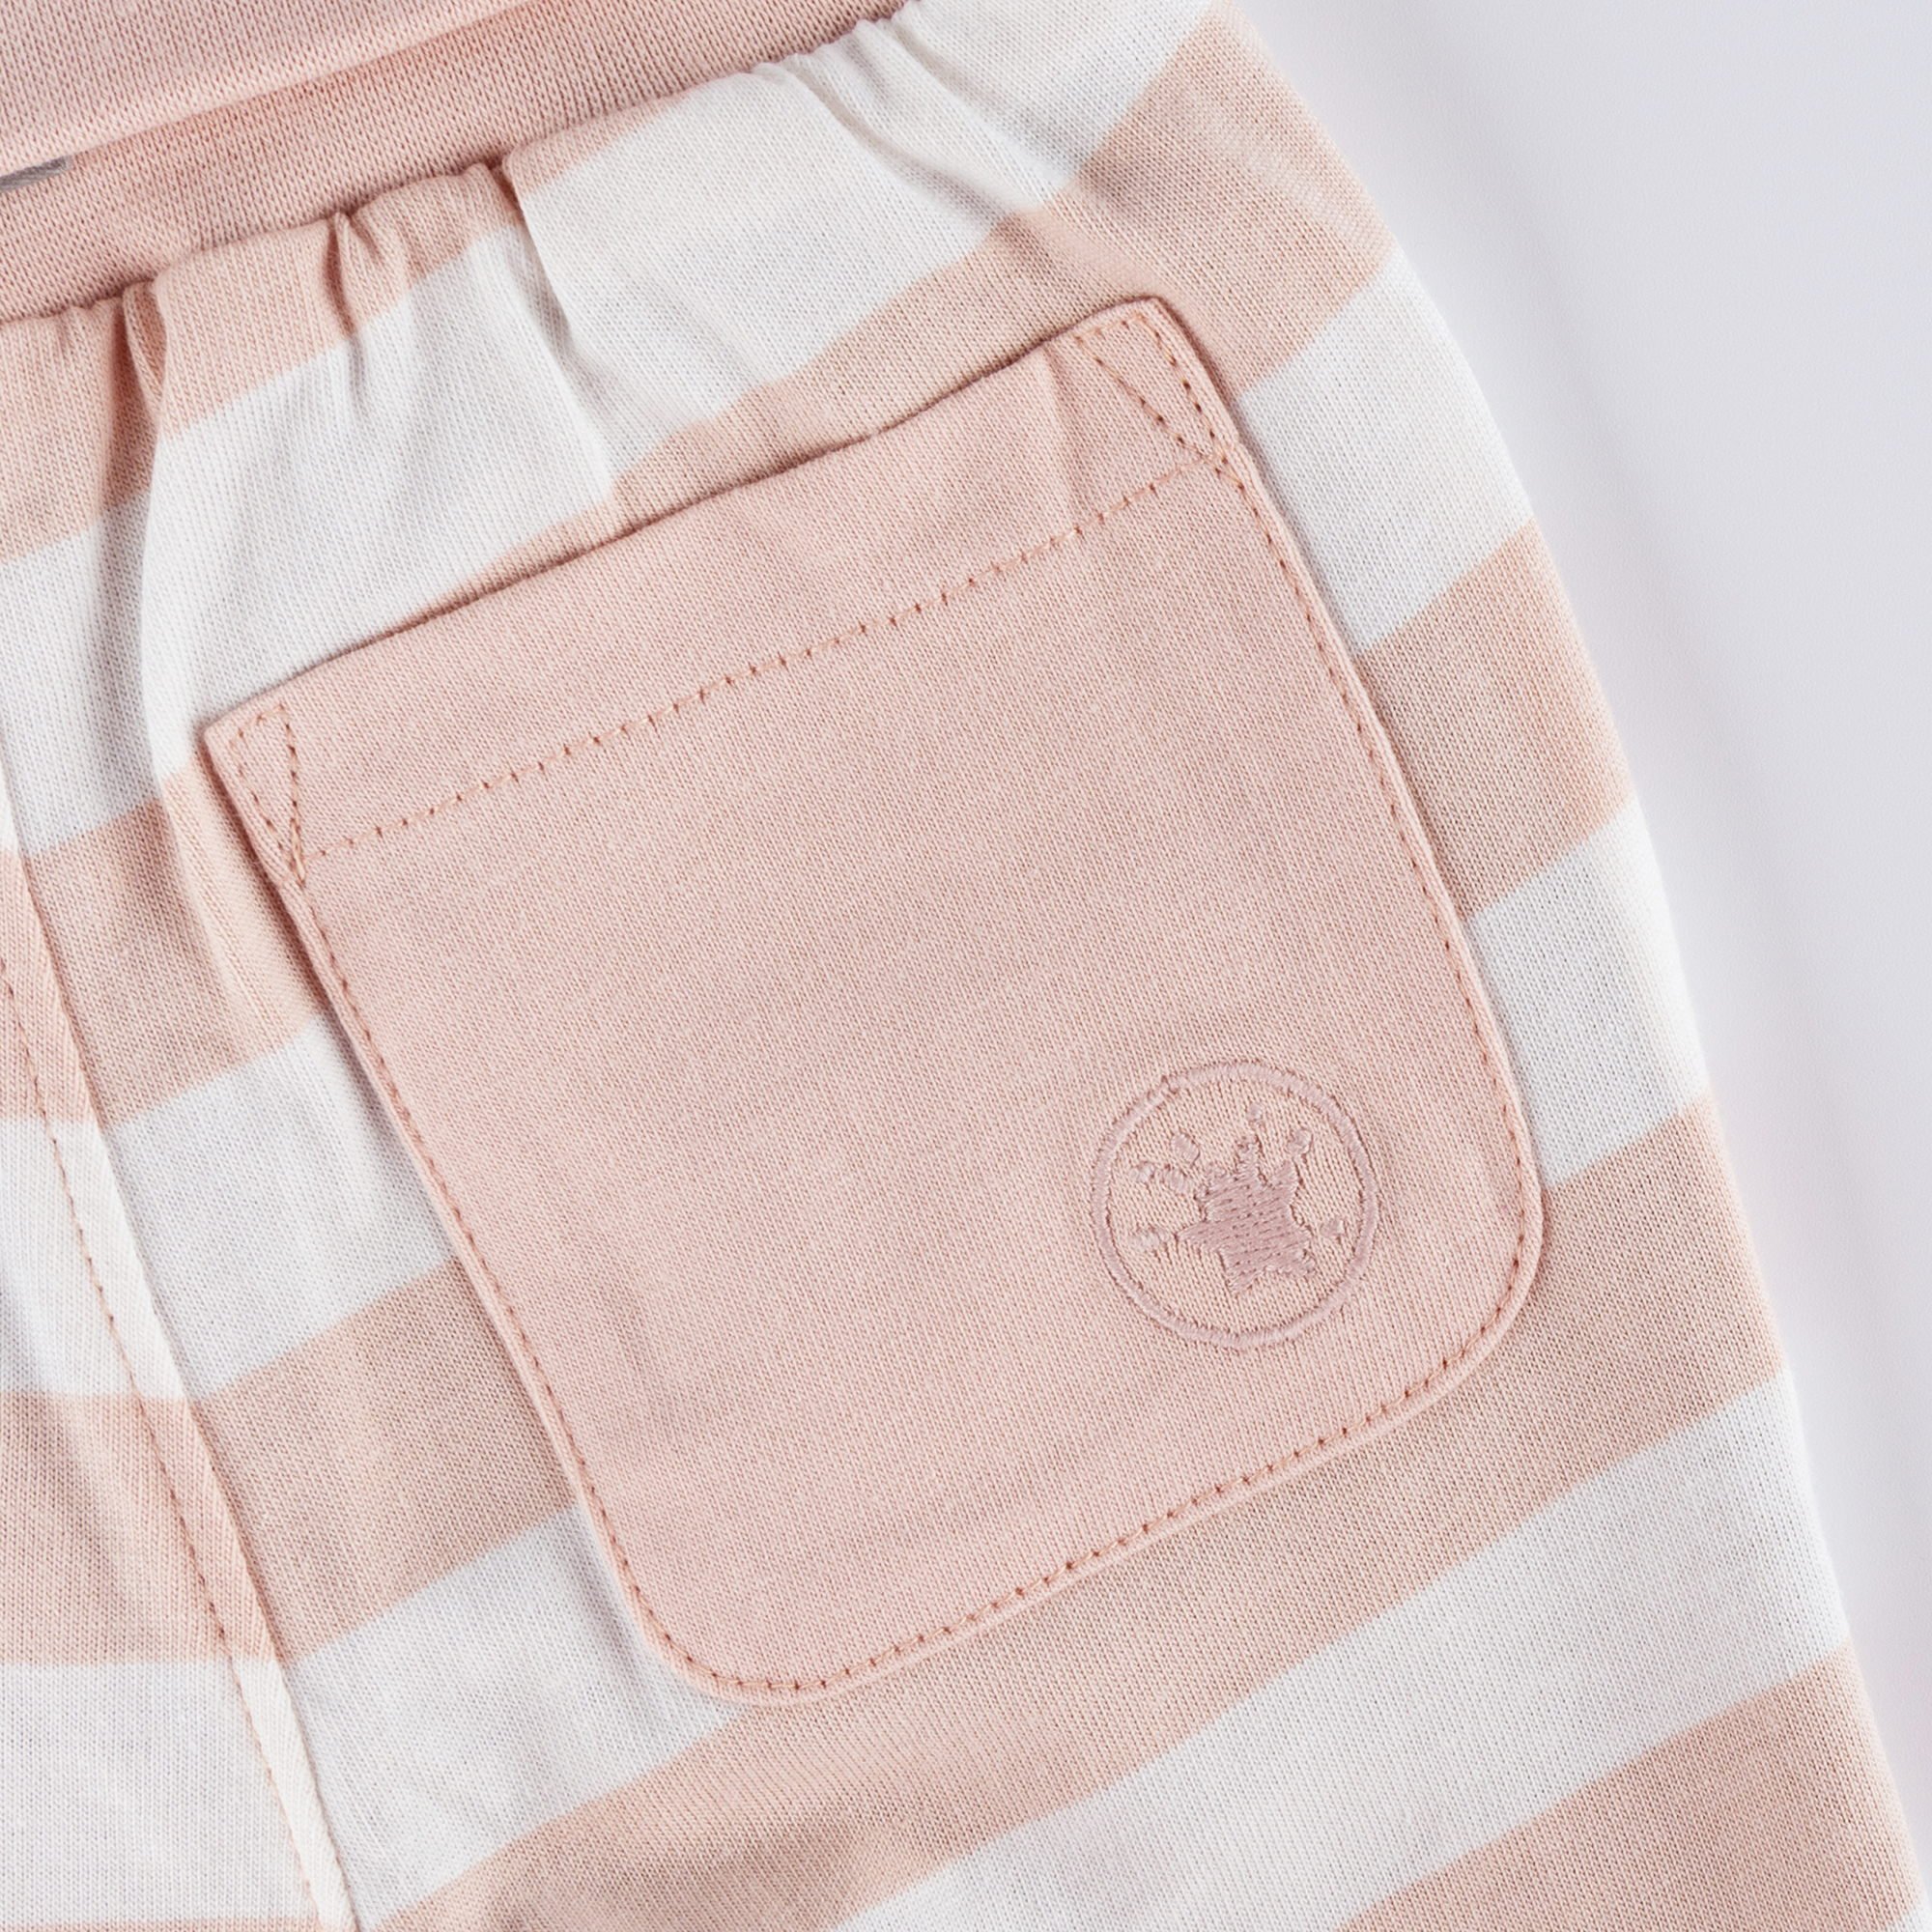 Reversible baby soft pants, pale pink/sugar brown